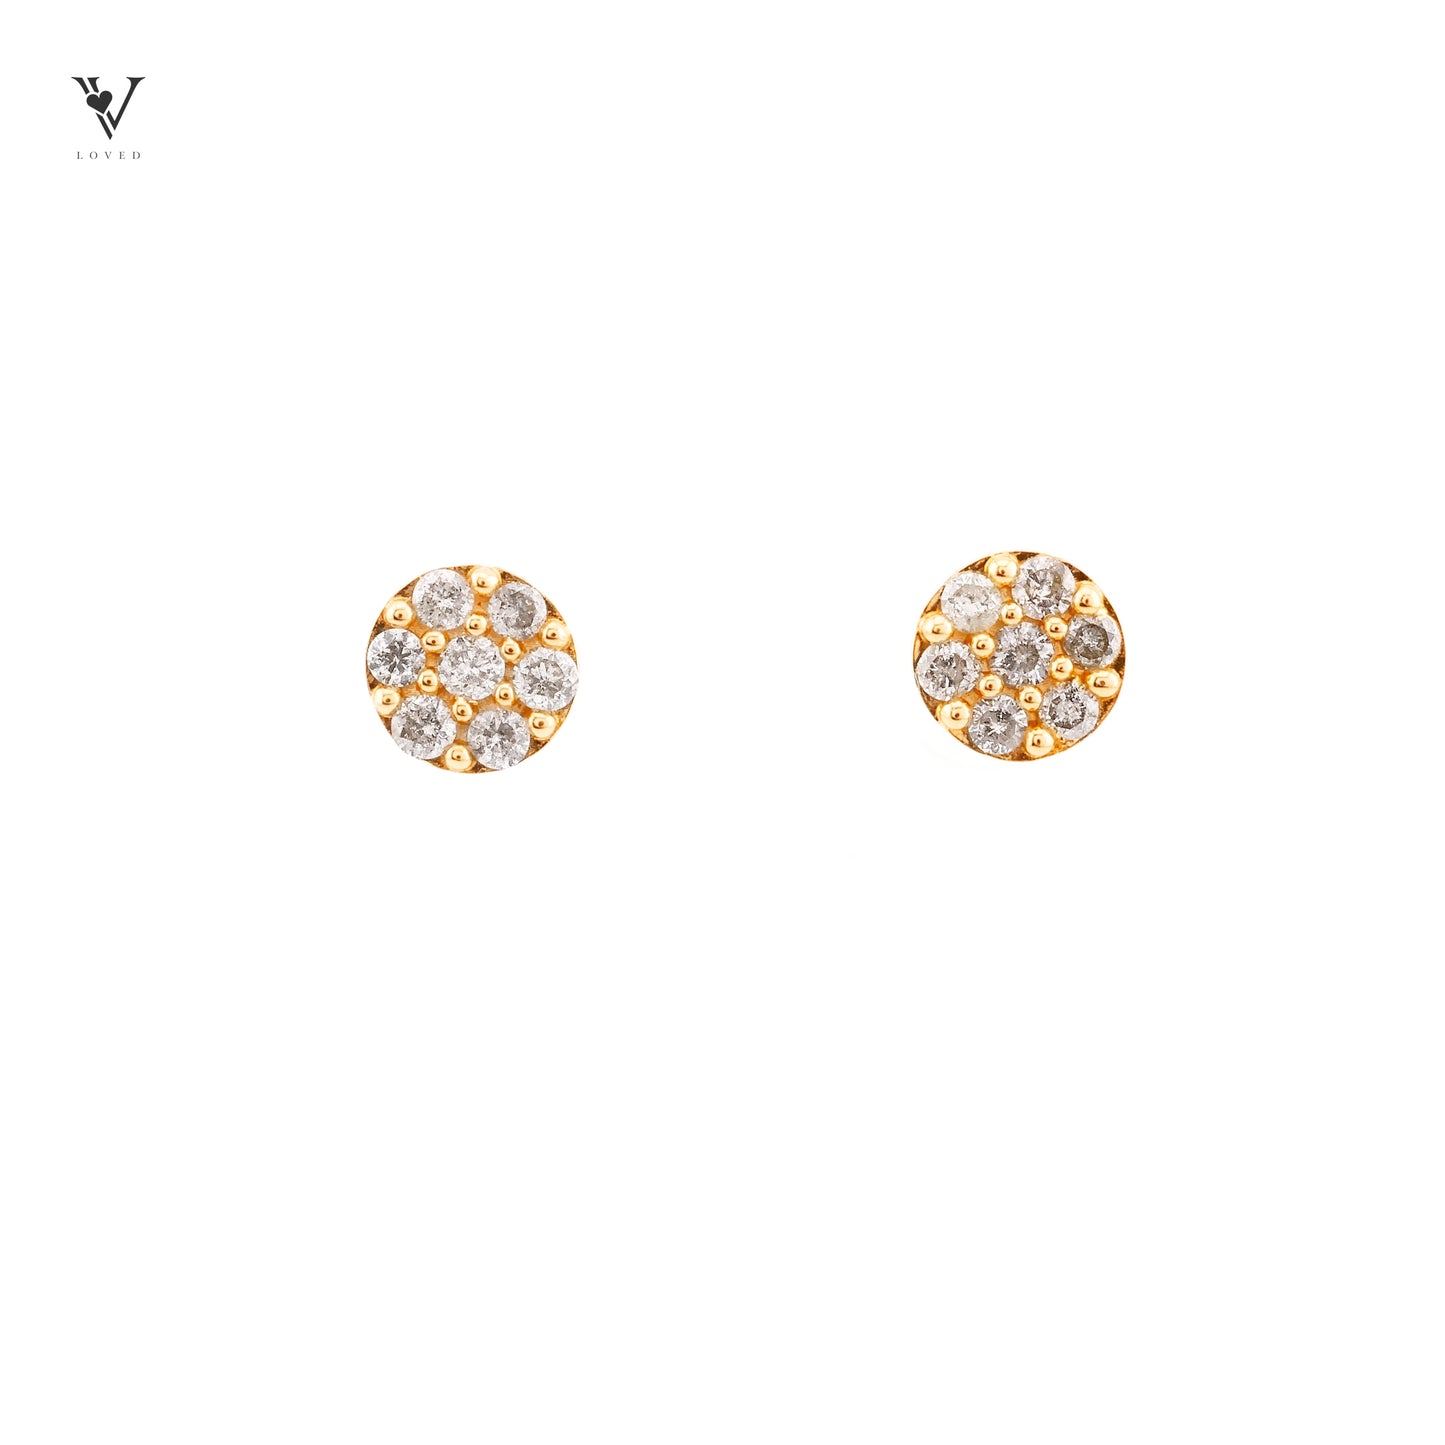 Métamorphique Many-ways Diamond Earrings